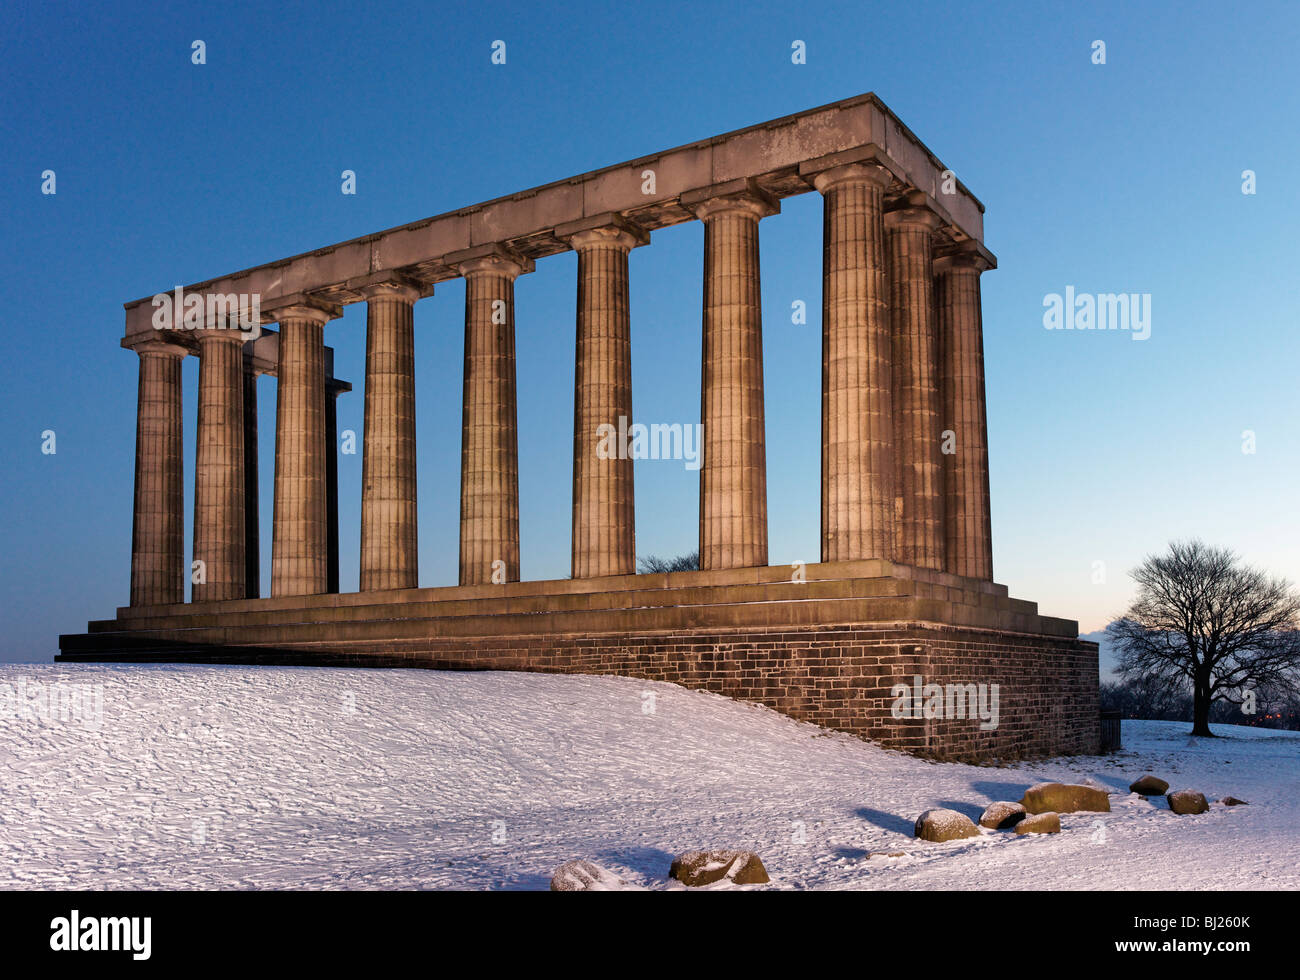 The National Monument, Calton Hill, Edinburgh, Scotland, UK. Stock Photo